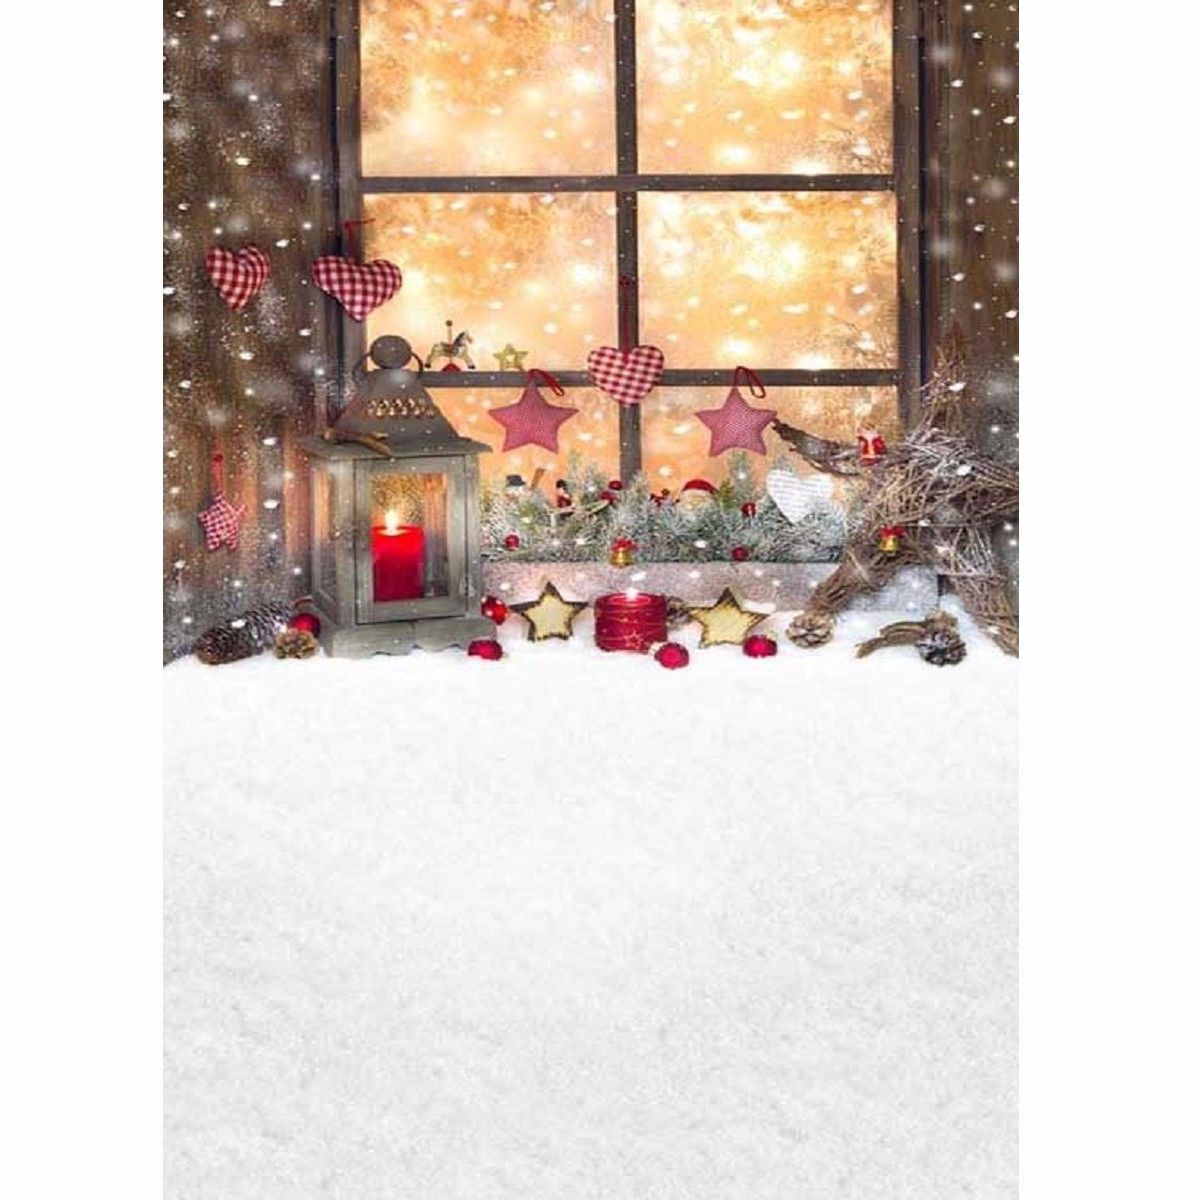 5x7ft-Christmas-Window-Vinyl-Background-Backdrop-Photography-Photo-Studio-Props-1112417